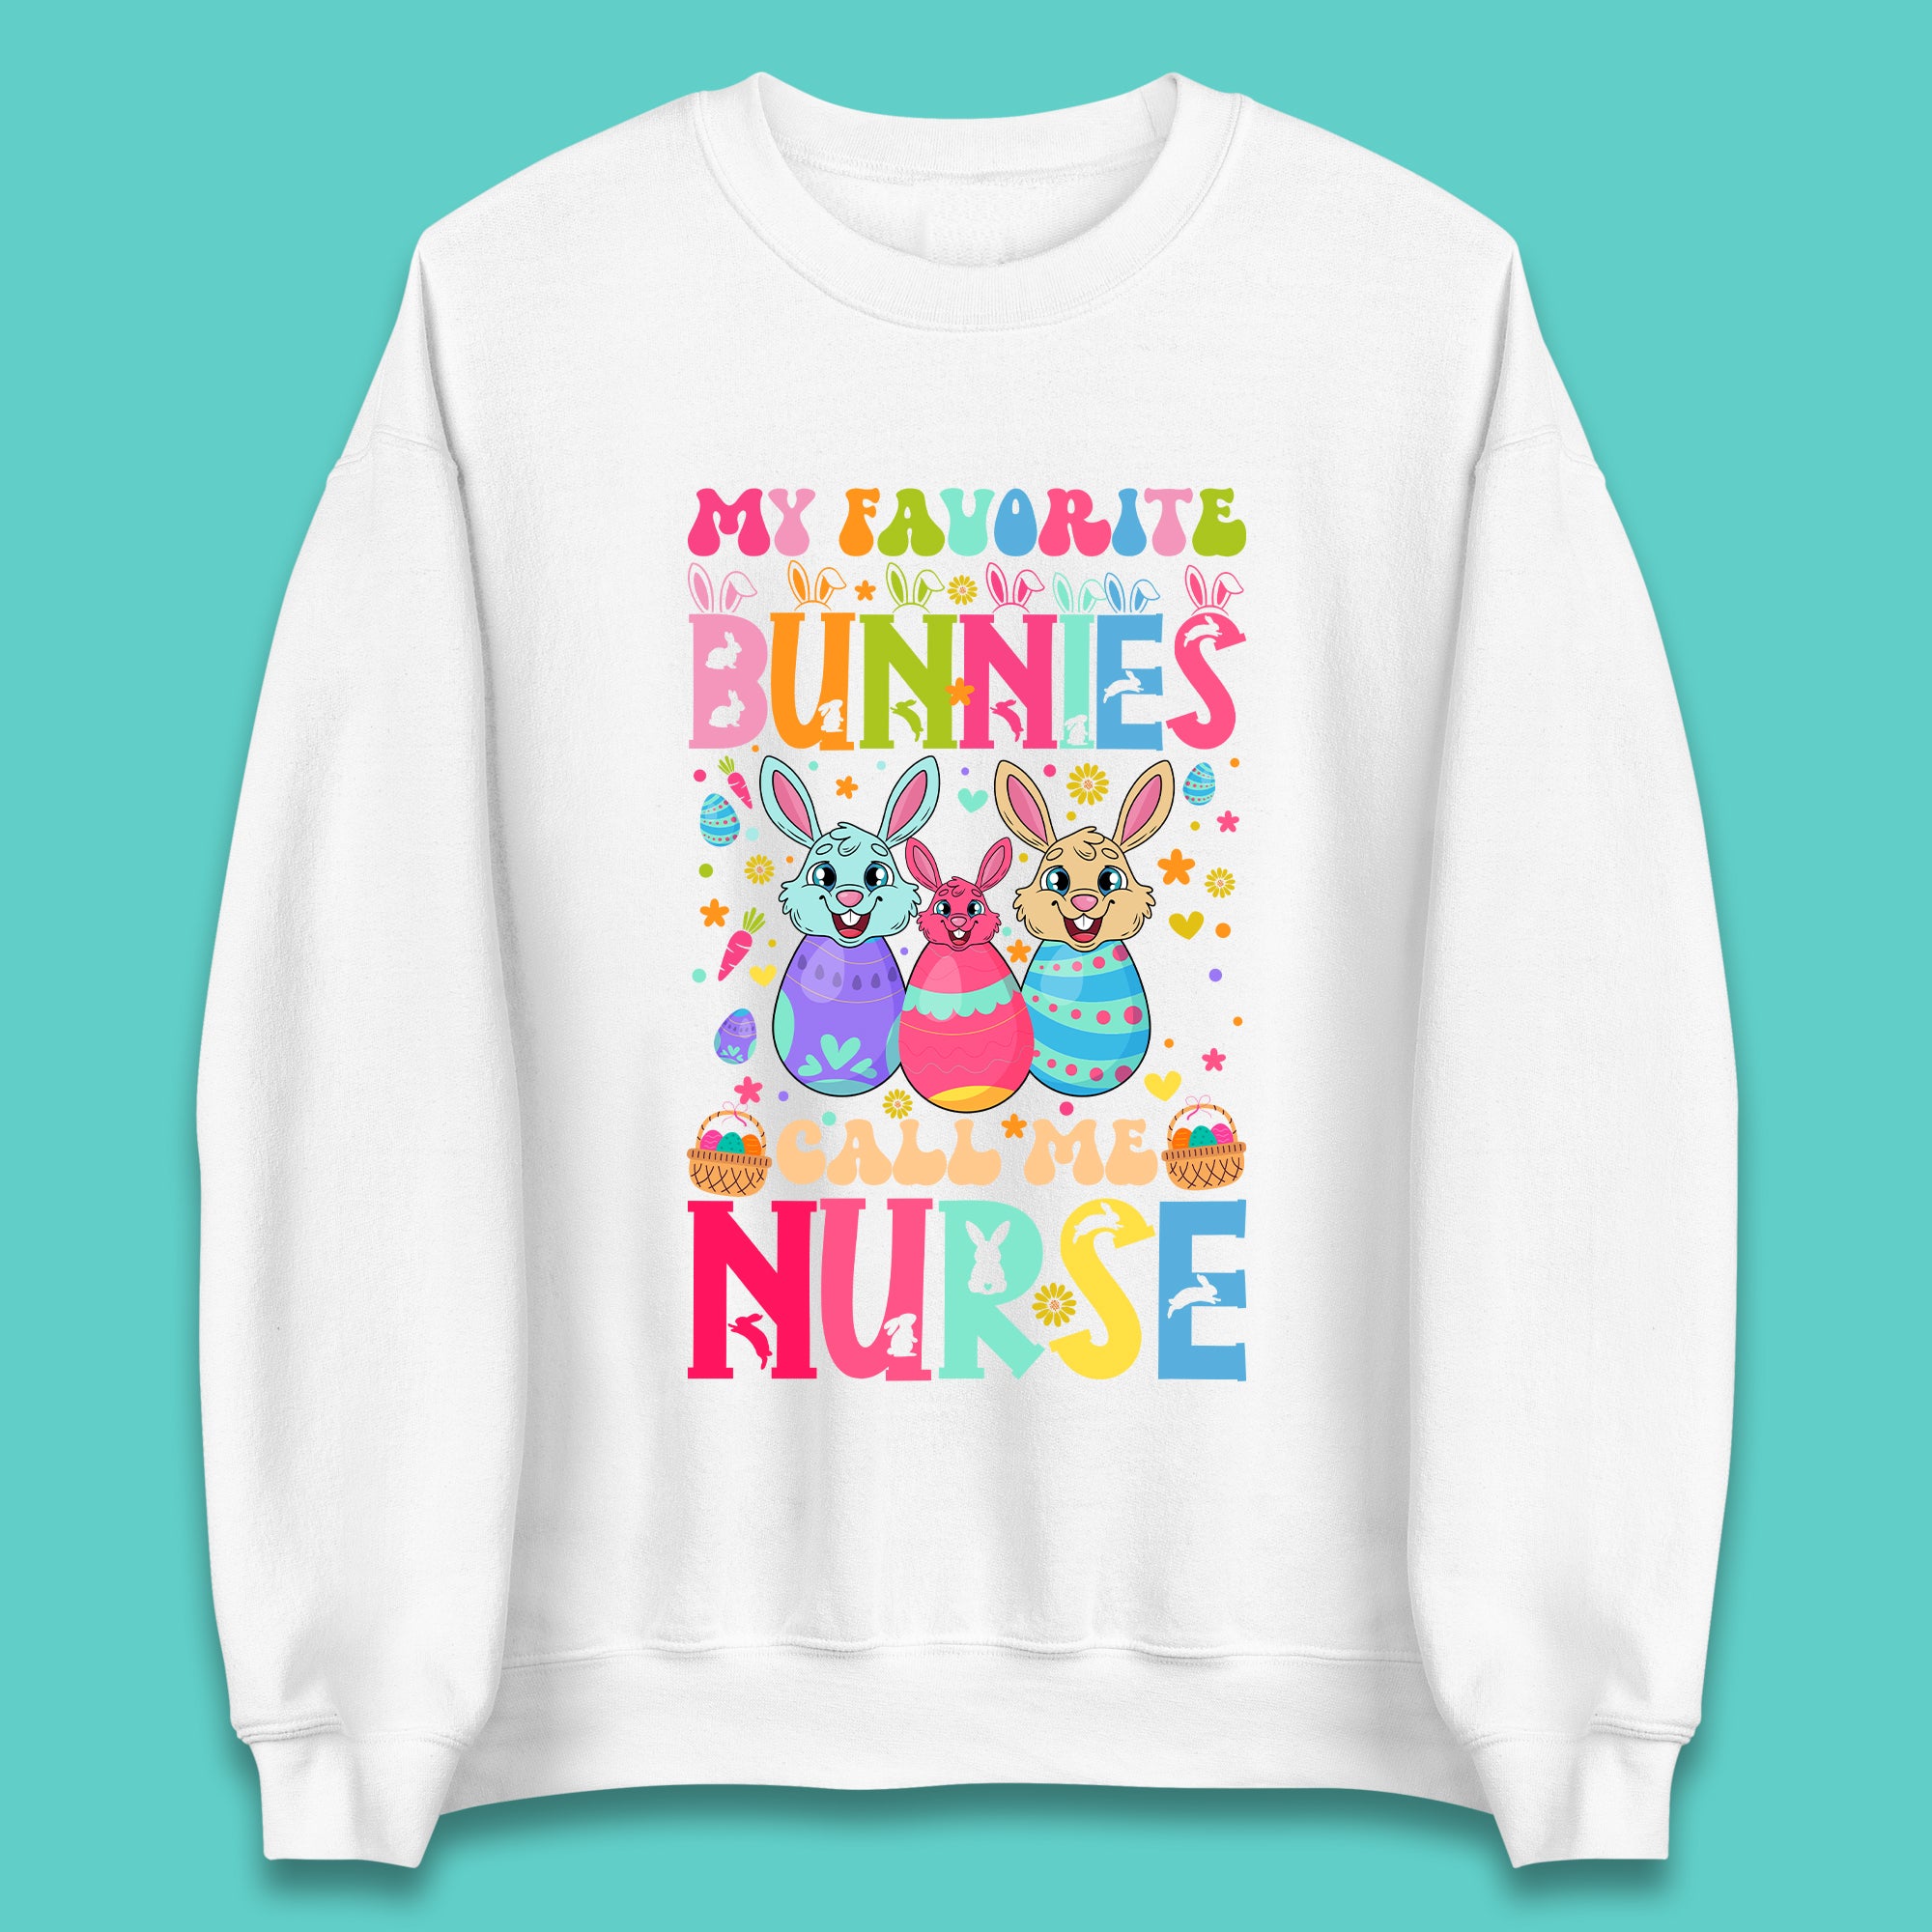 My Favorite Bunnies Call Me Nurse Unisex Sweatshirt